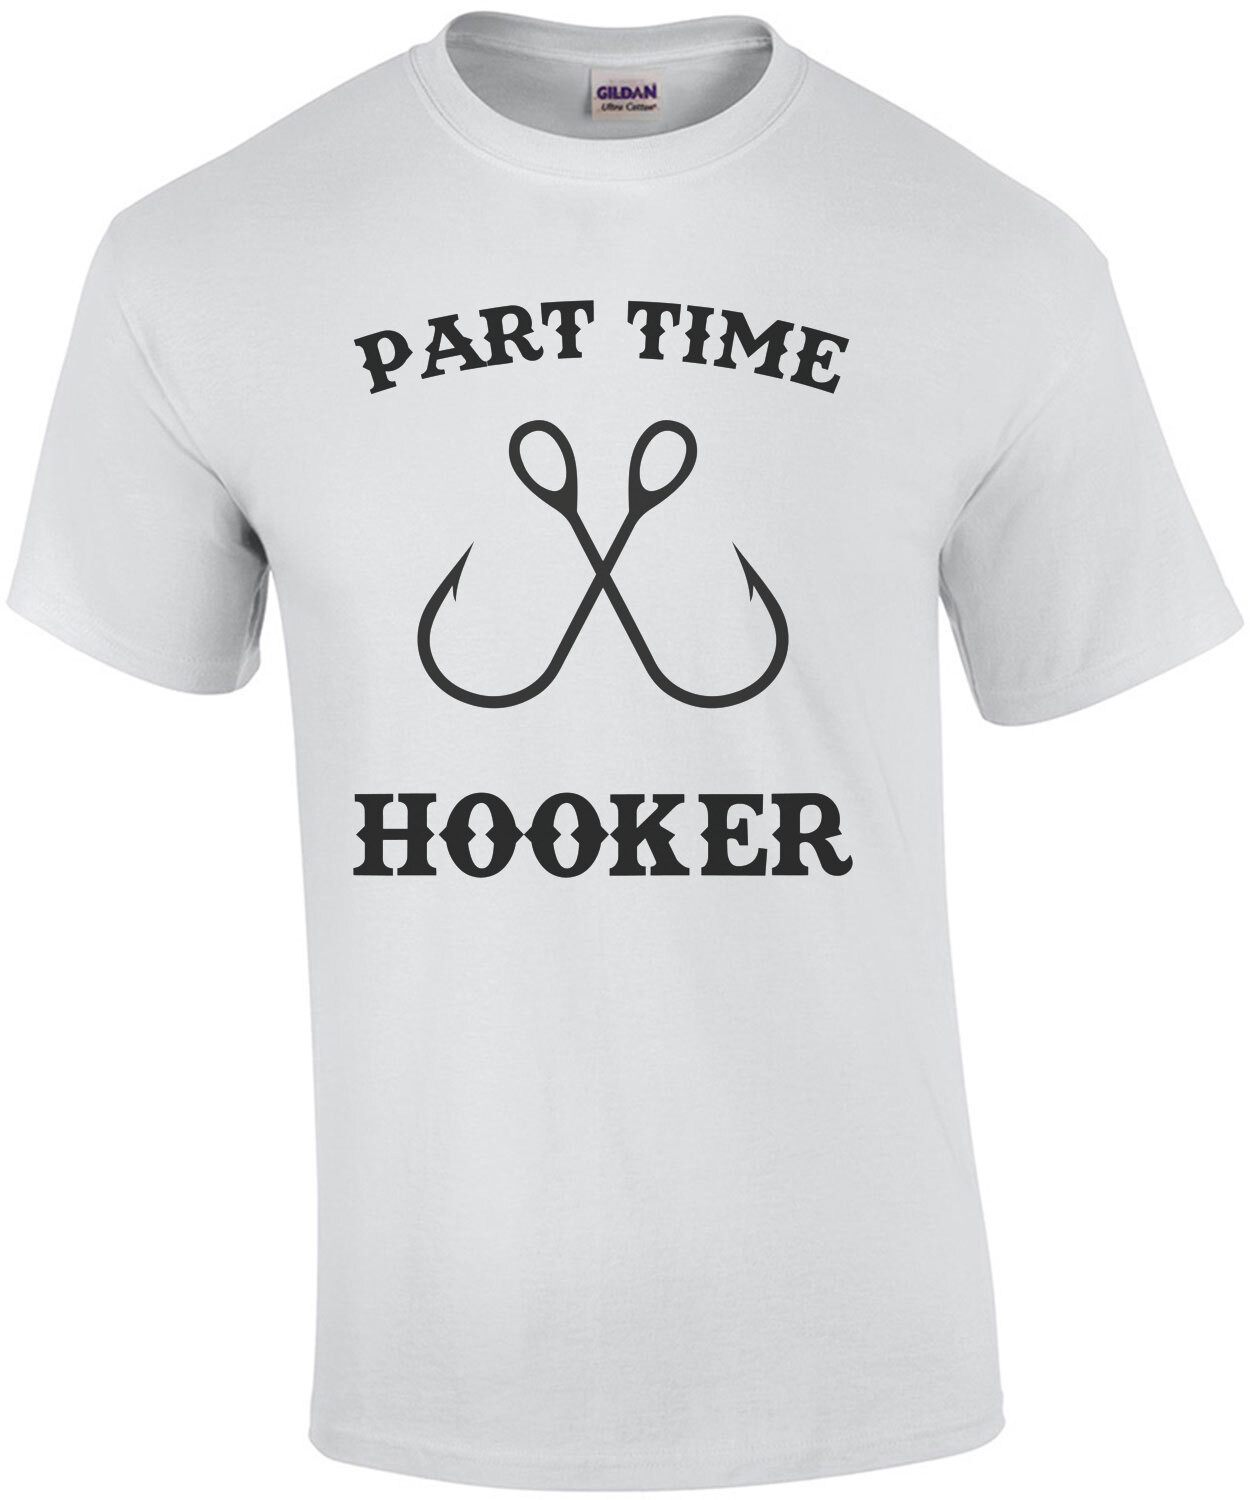 Part time hooker - funny fishing t-shirt